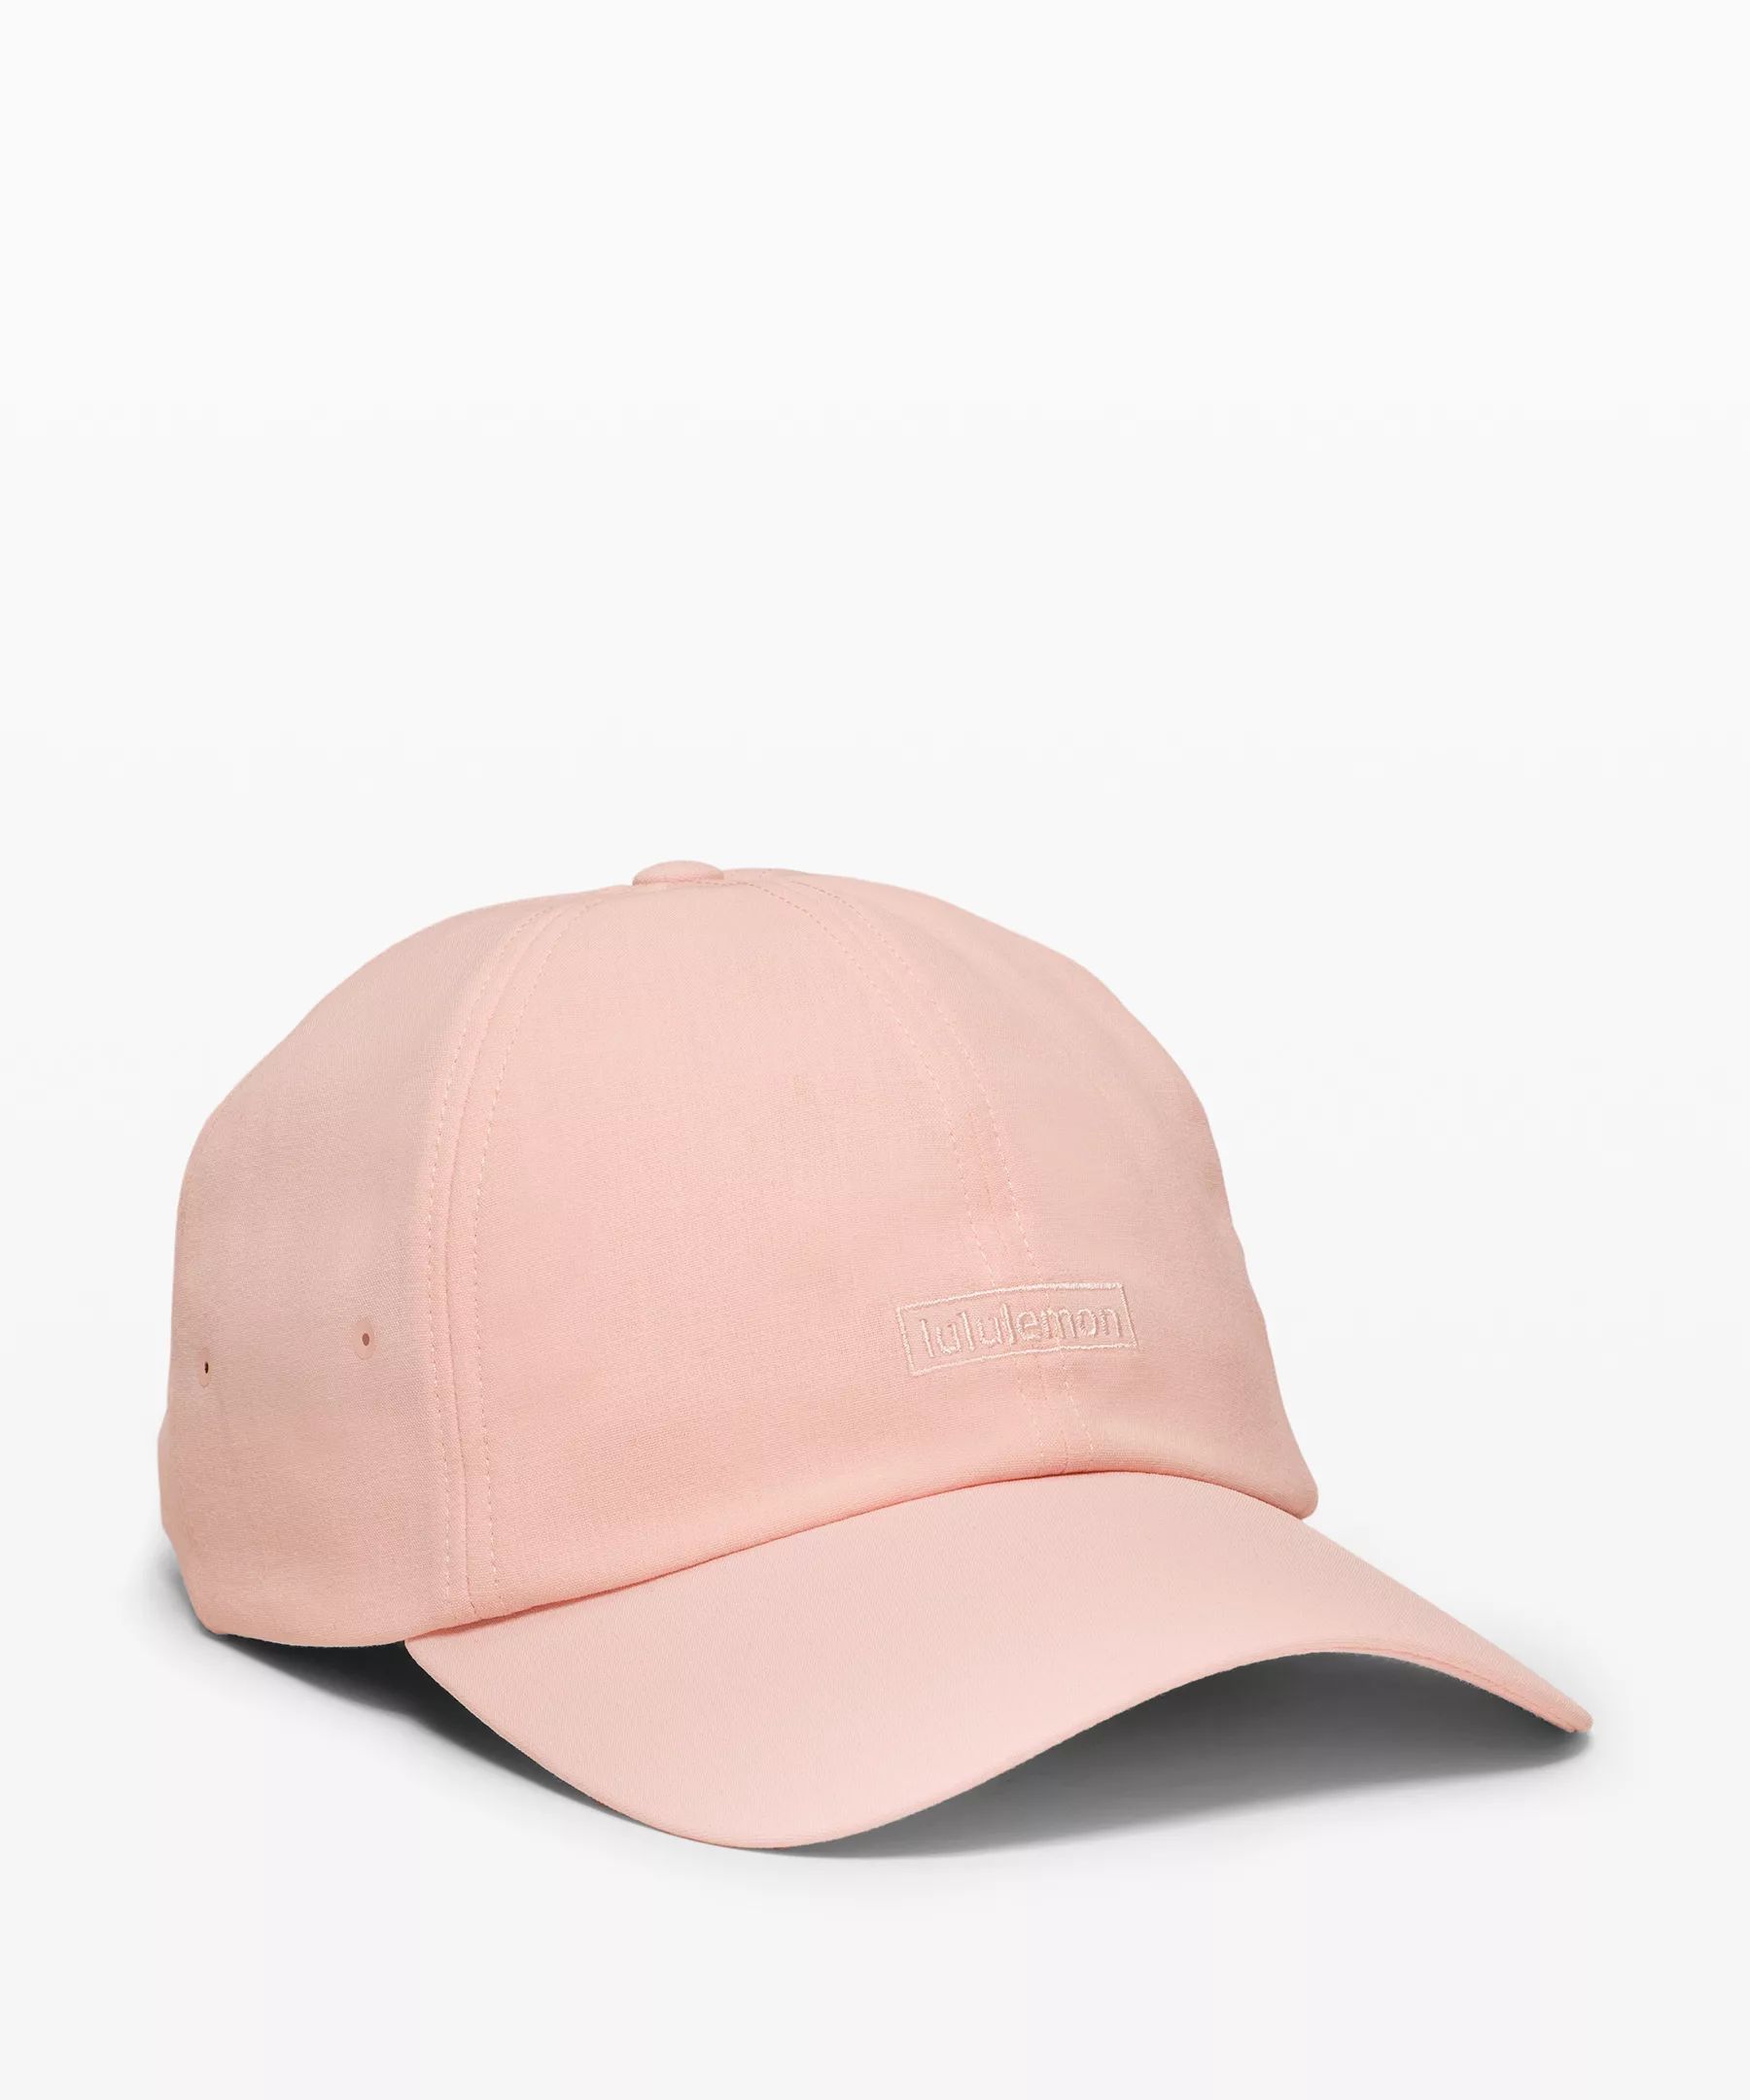 Baller Hat II Soft | Lululemon (US)